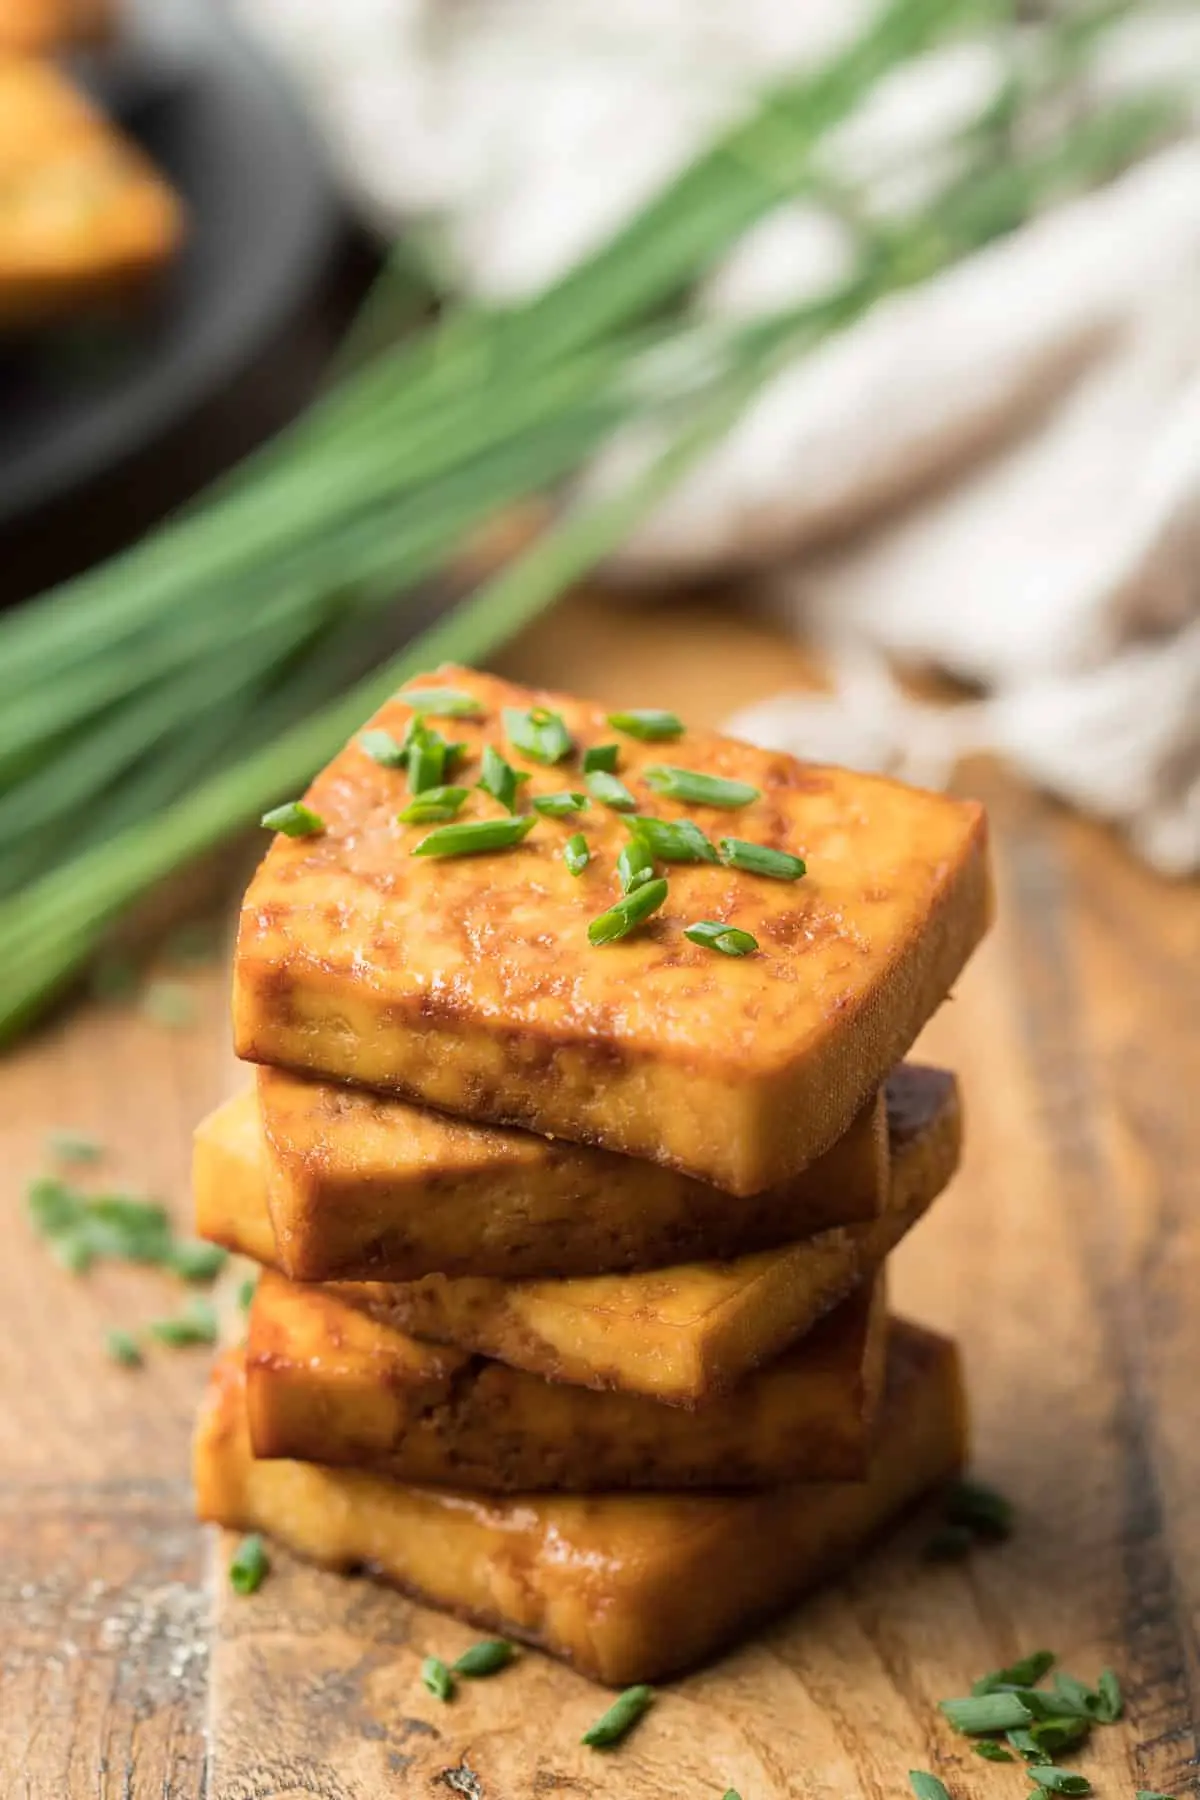 smoked tofu substitute - What can I use instead of homemade tofu